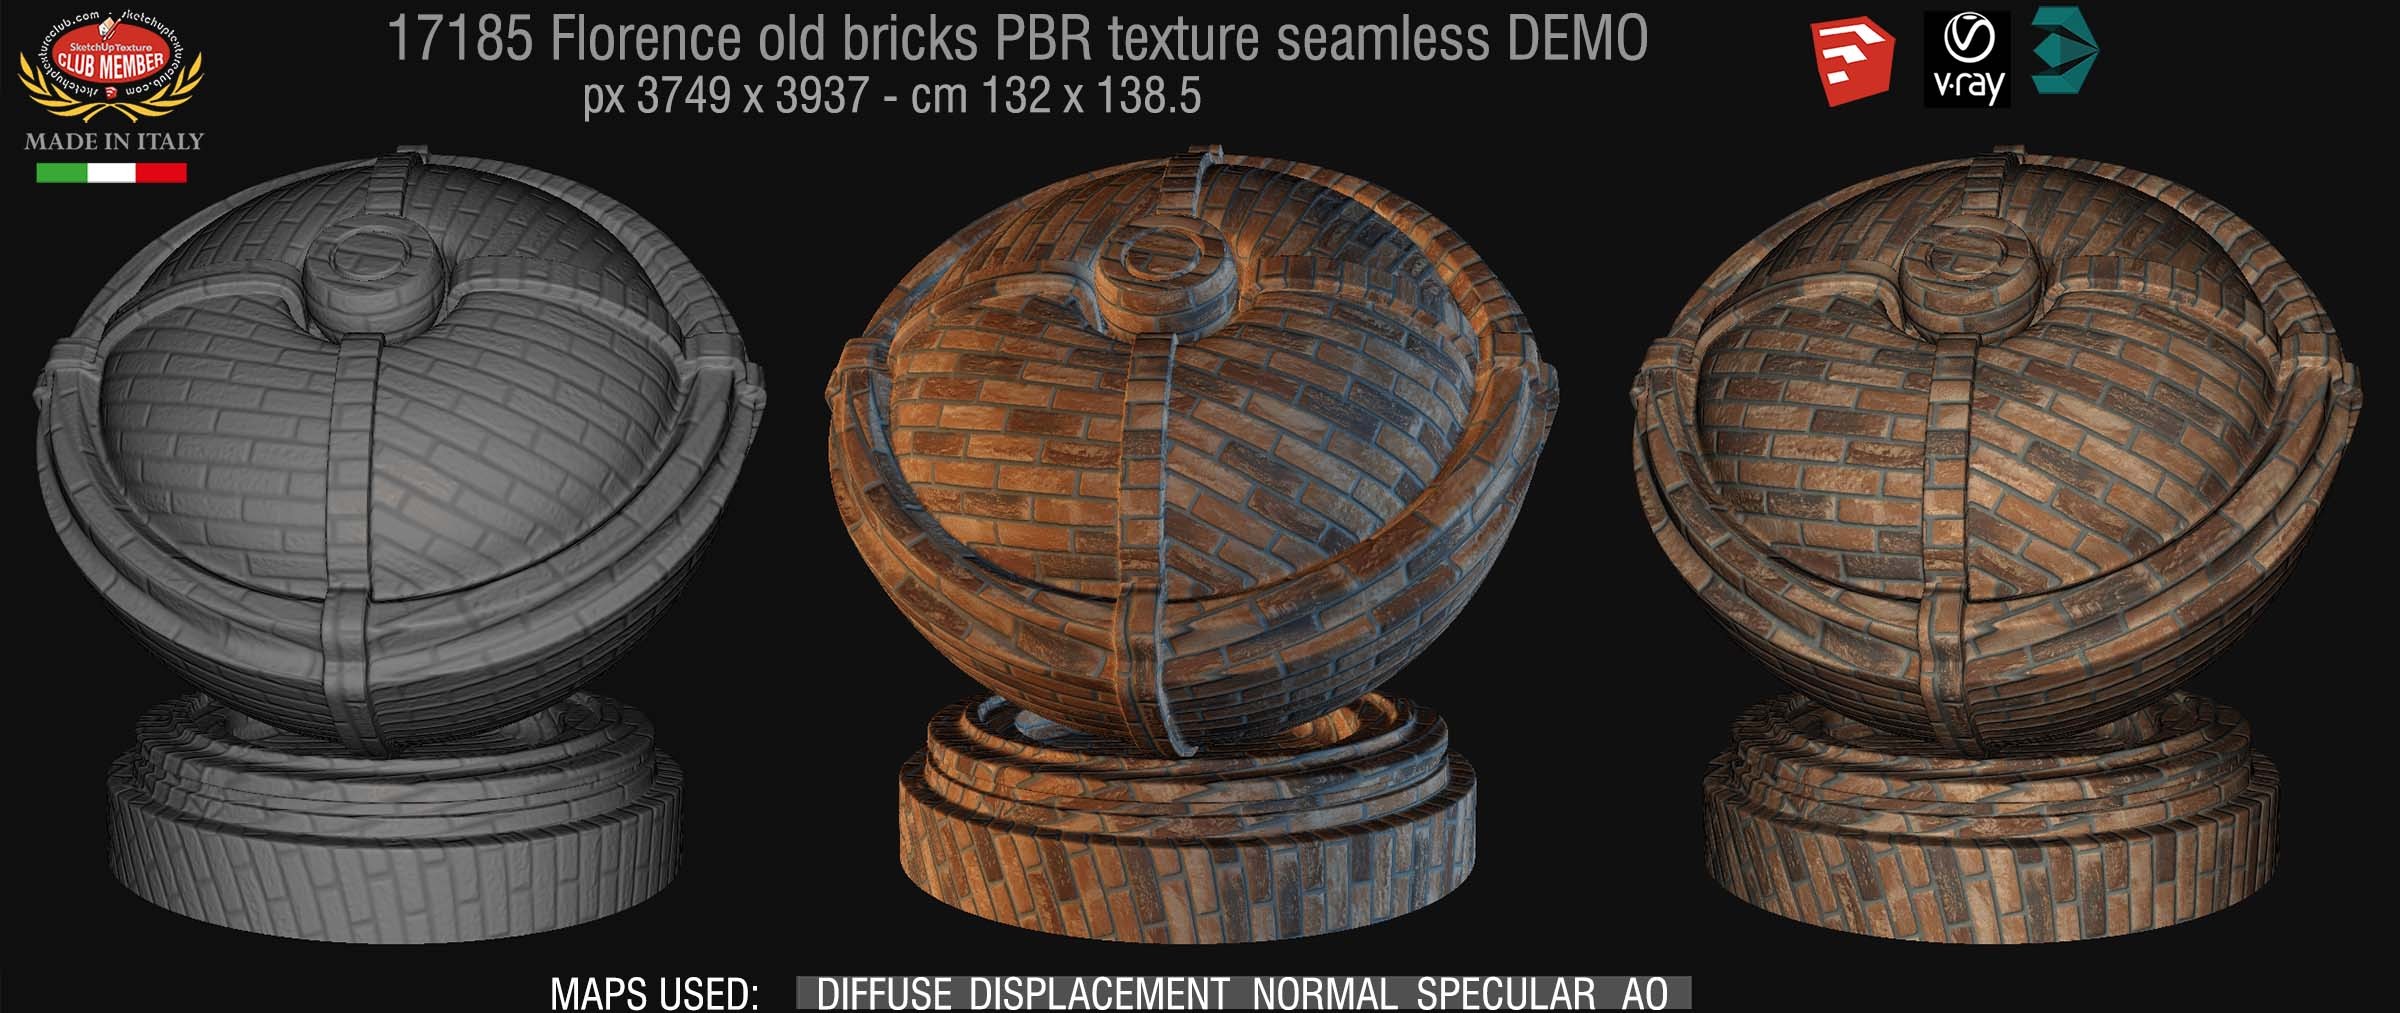 17185 Florence old bricks PBR texture seamless DEMO